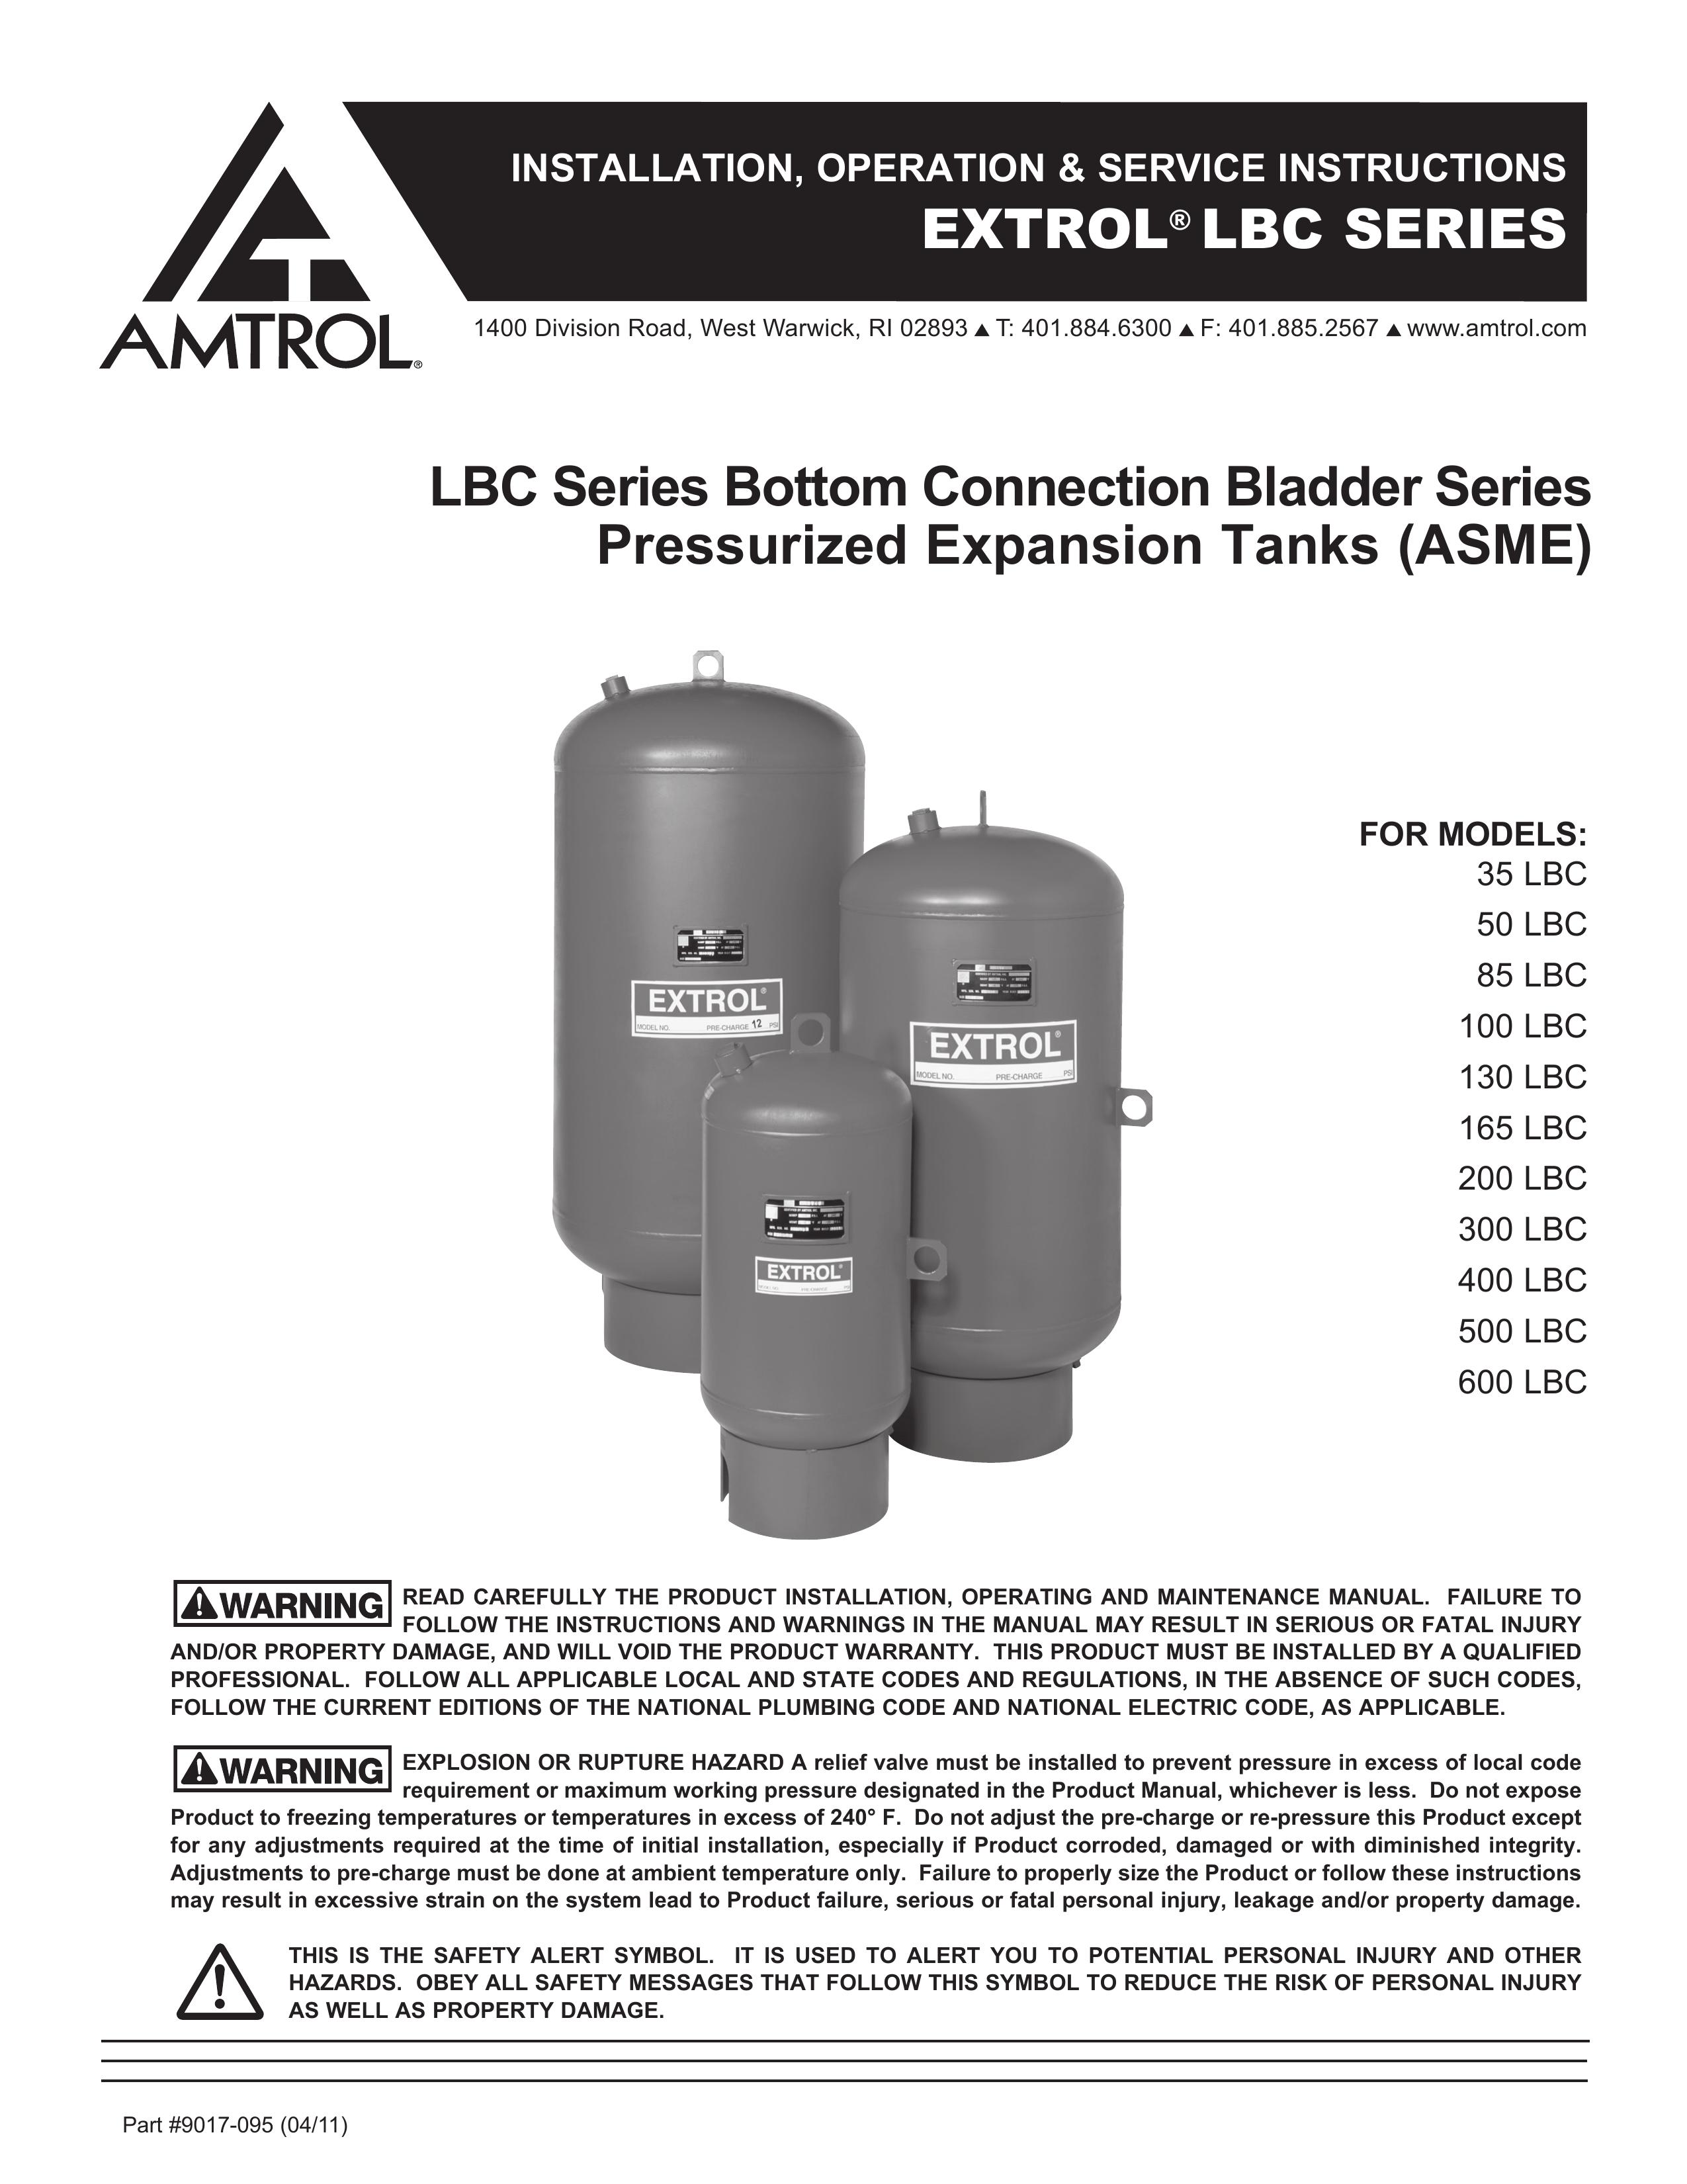 Amtrol 165 LBC Oxygen Equipment User Manual